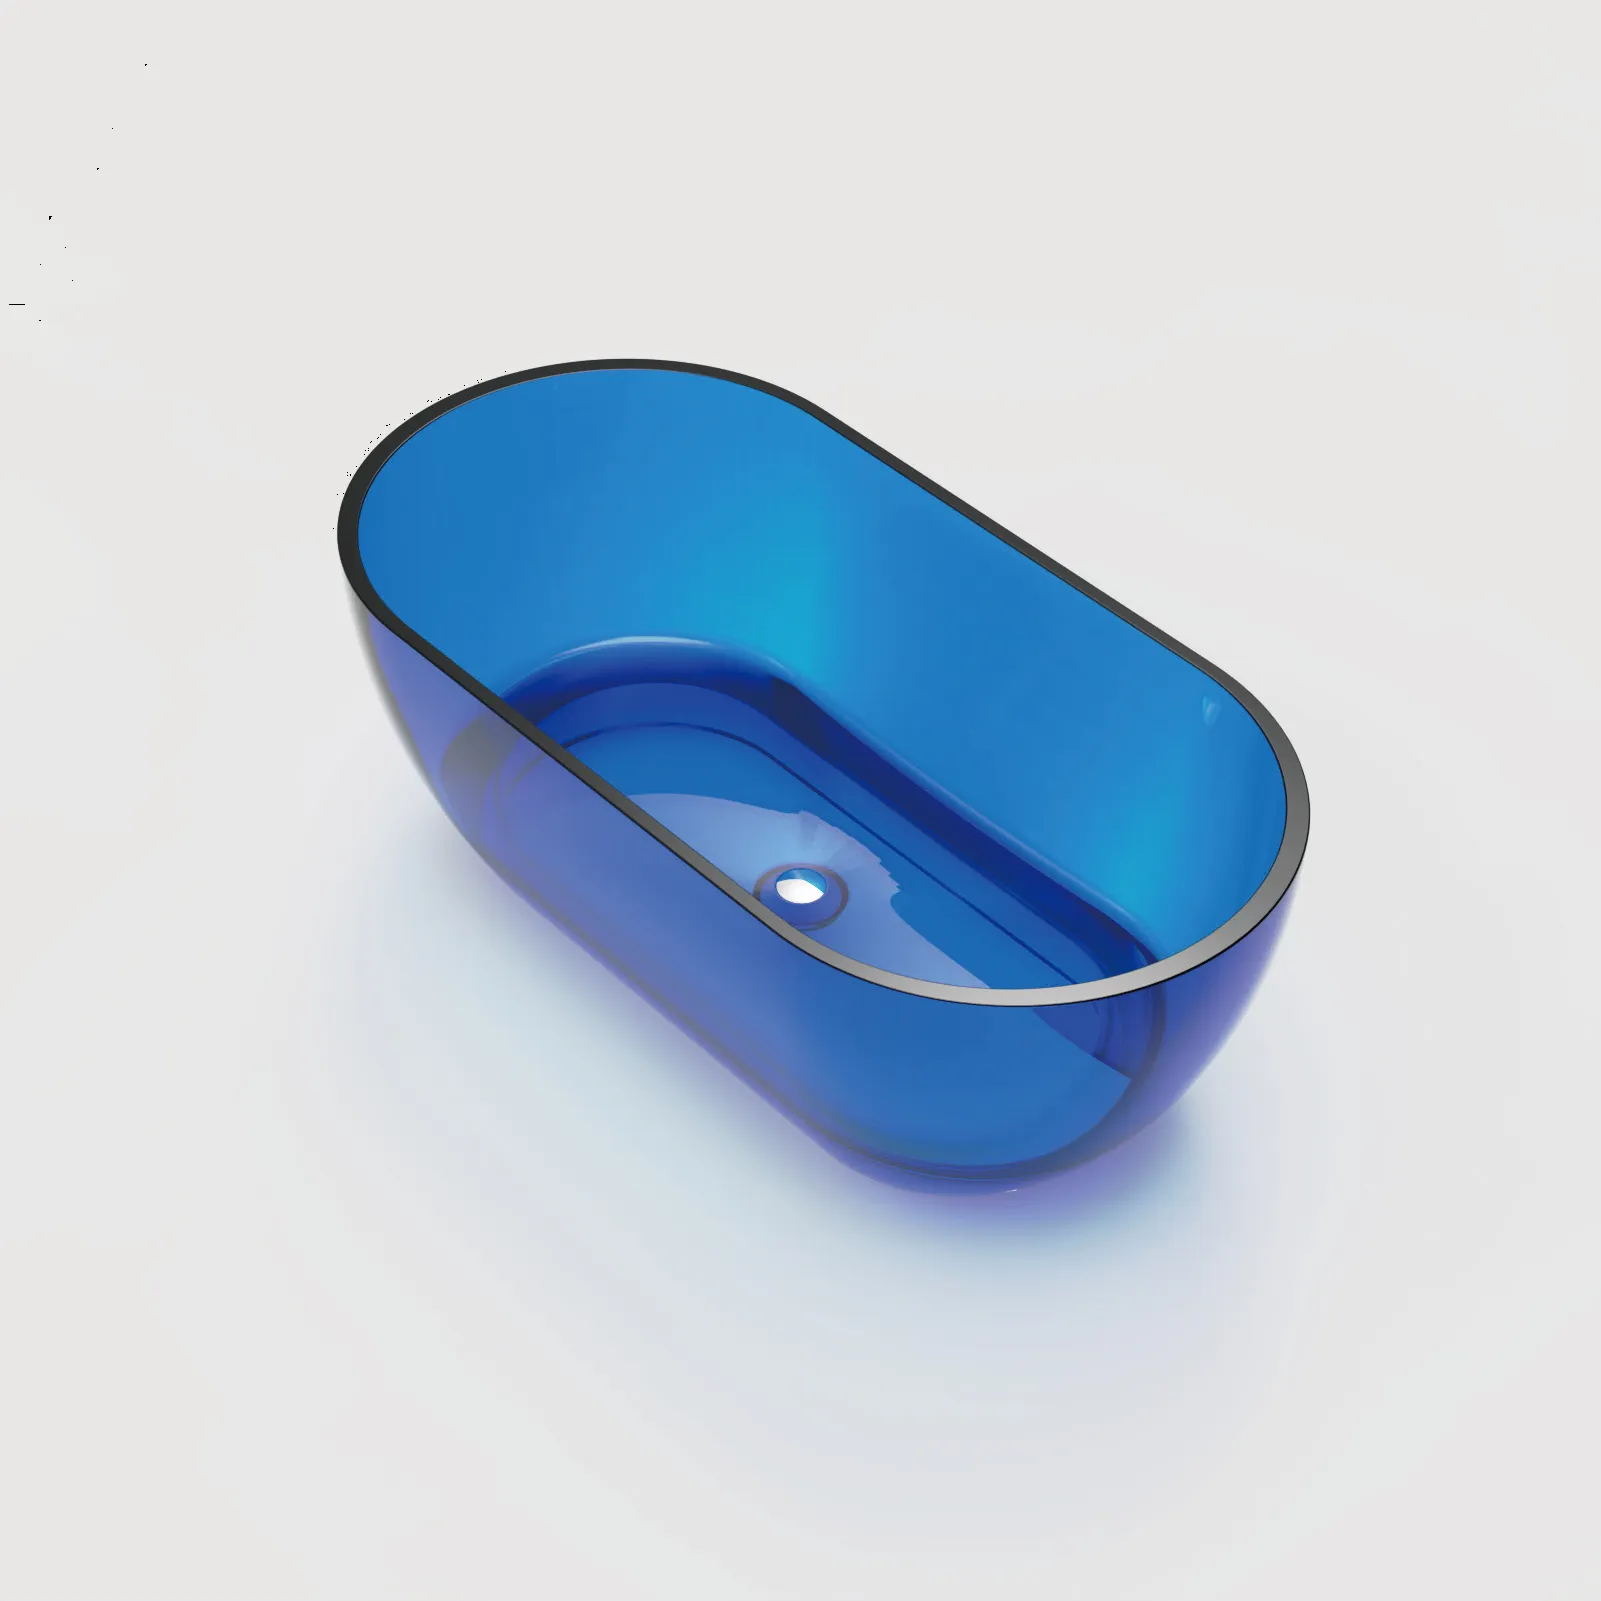 Wiselink-bañeras de colores para baño, bañera transparente de resina translúcida, transparente